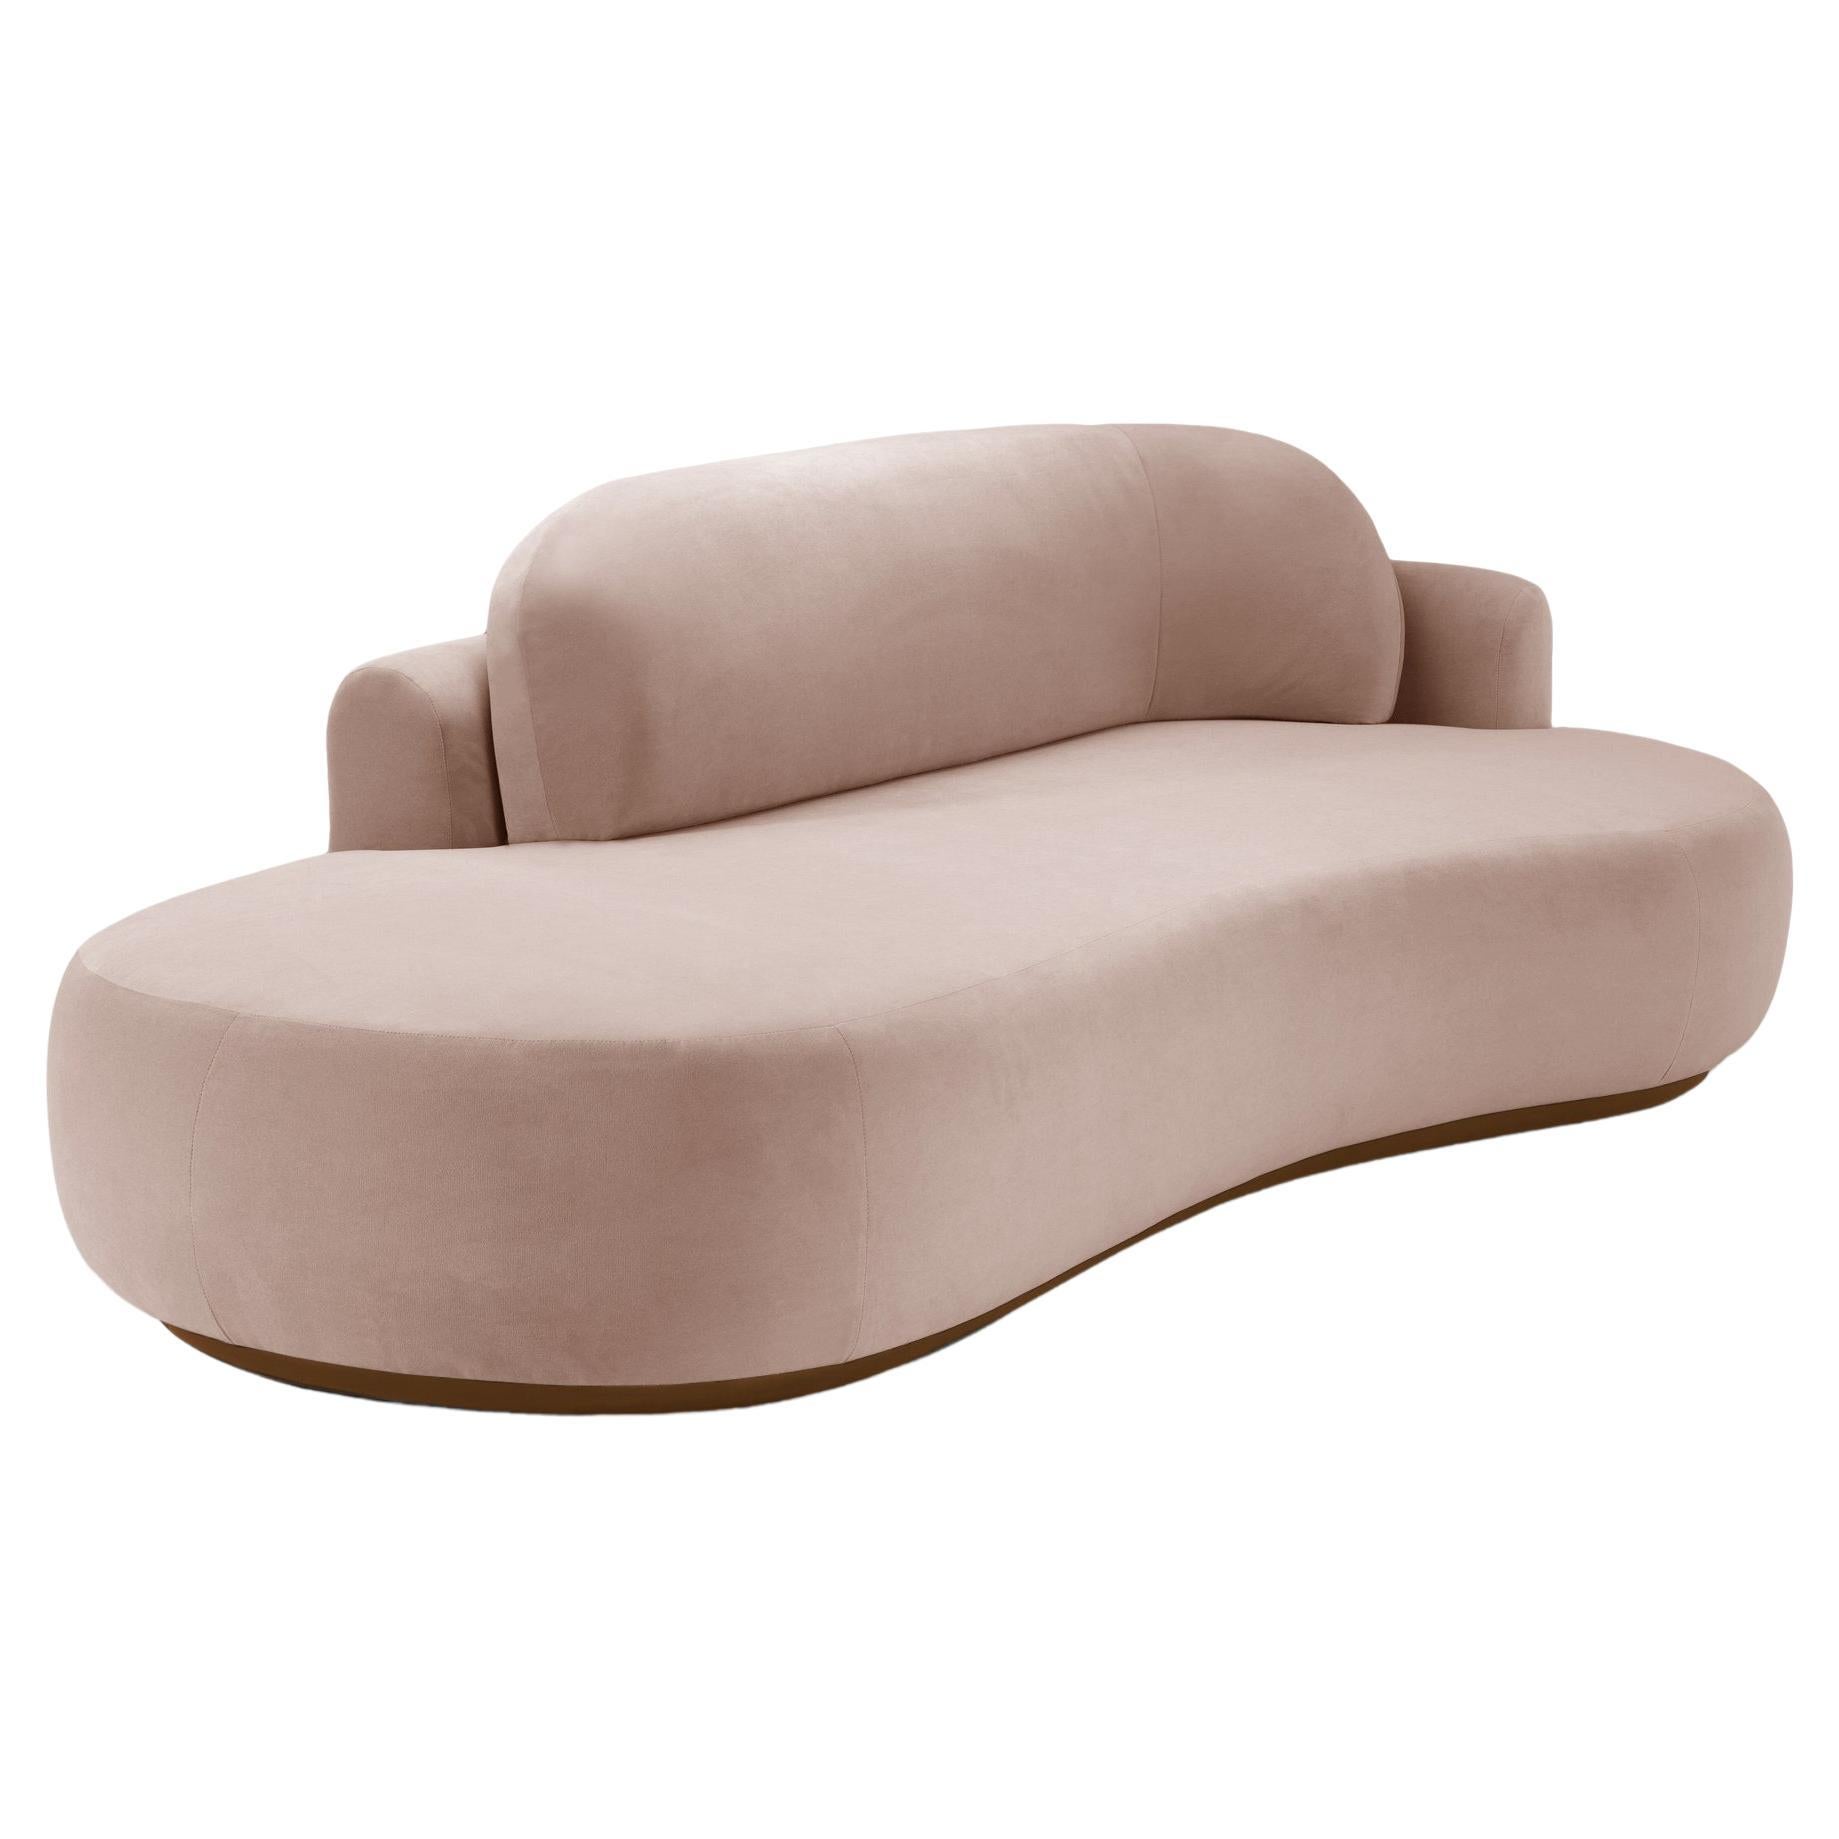 Naked Curved Sofa Single with Beech Ash-056-1 and Vigo Blossom